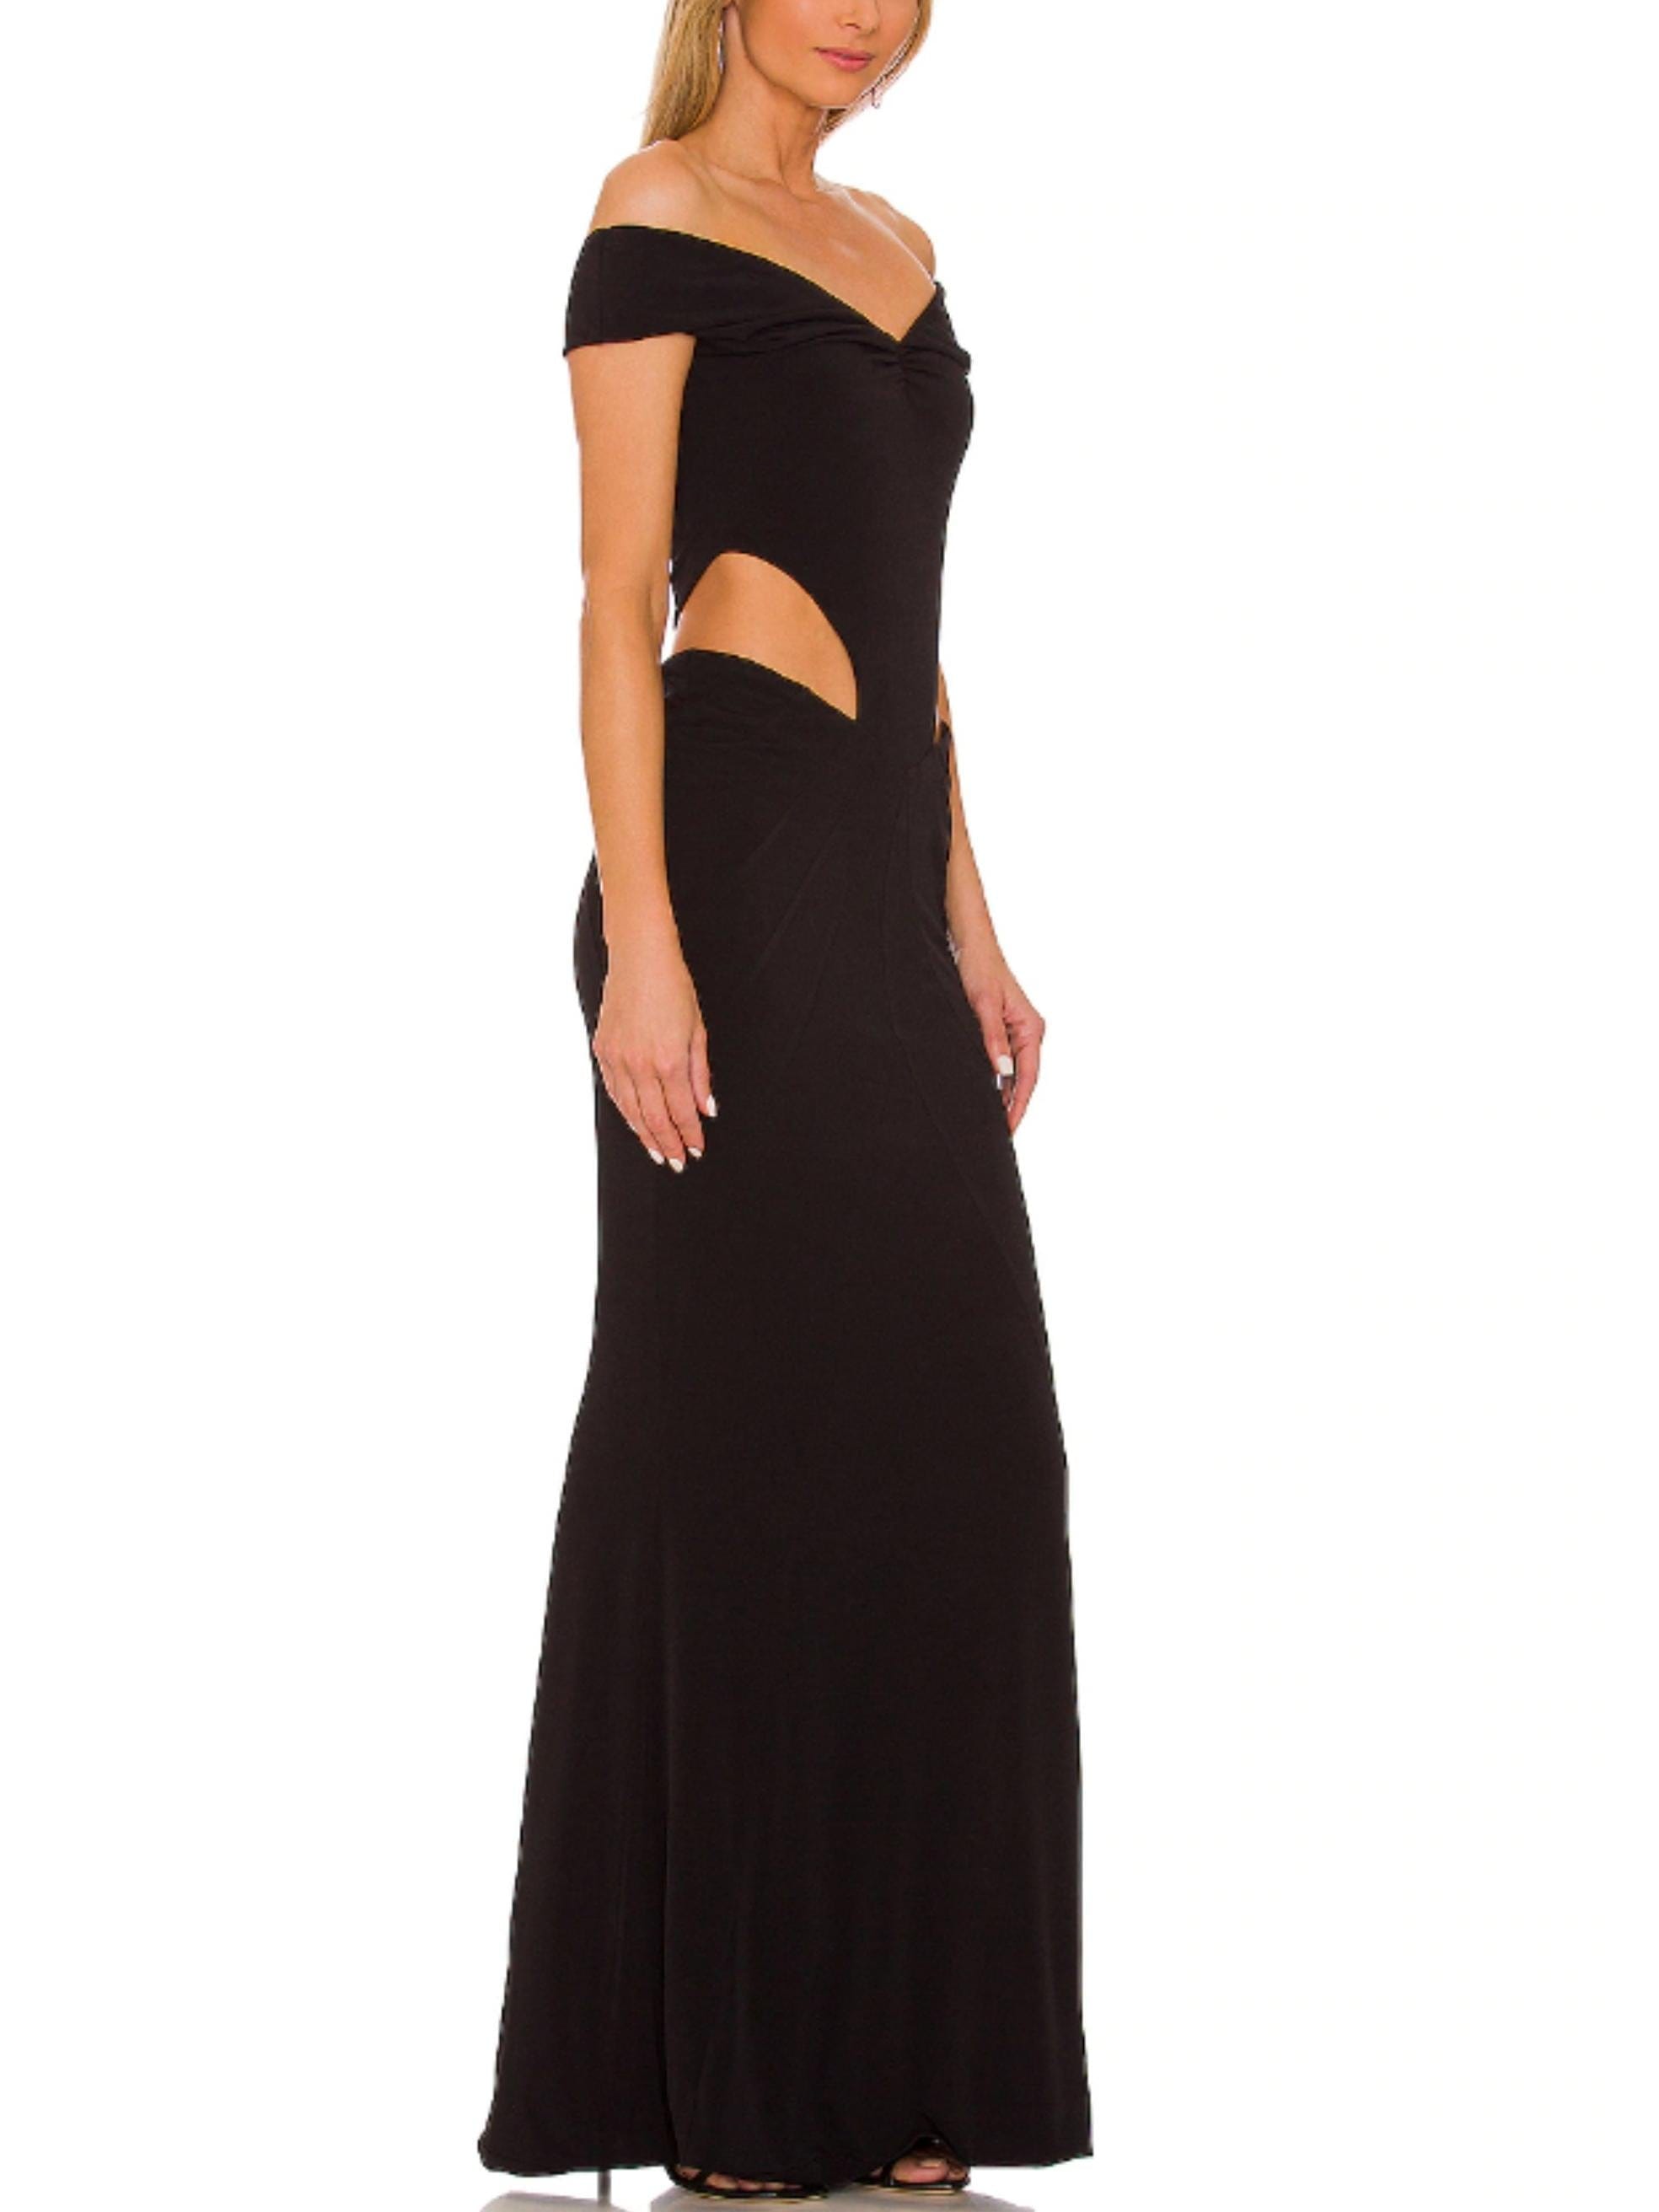 Retrofete Giada Dress in Black Size XS